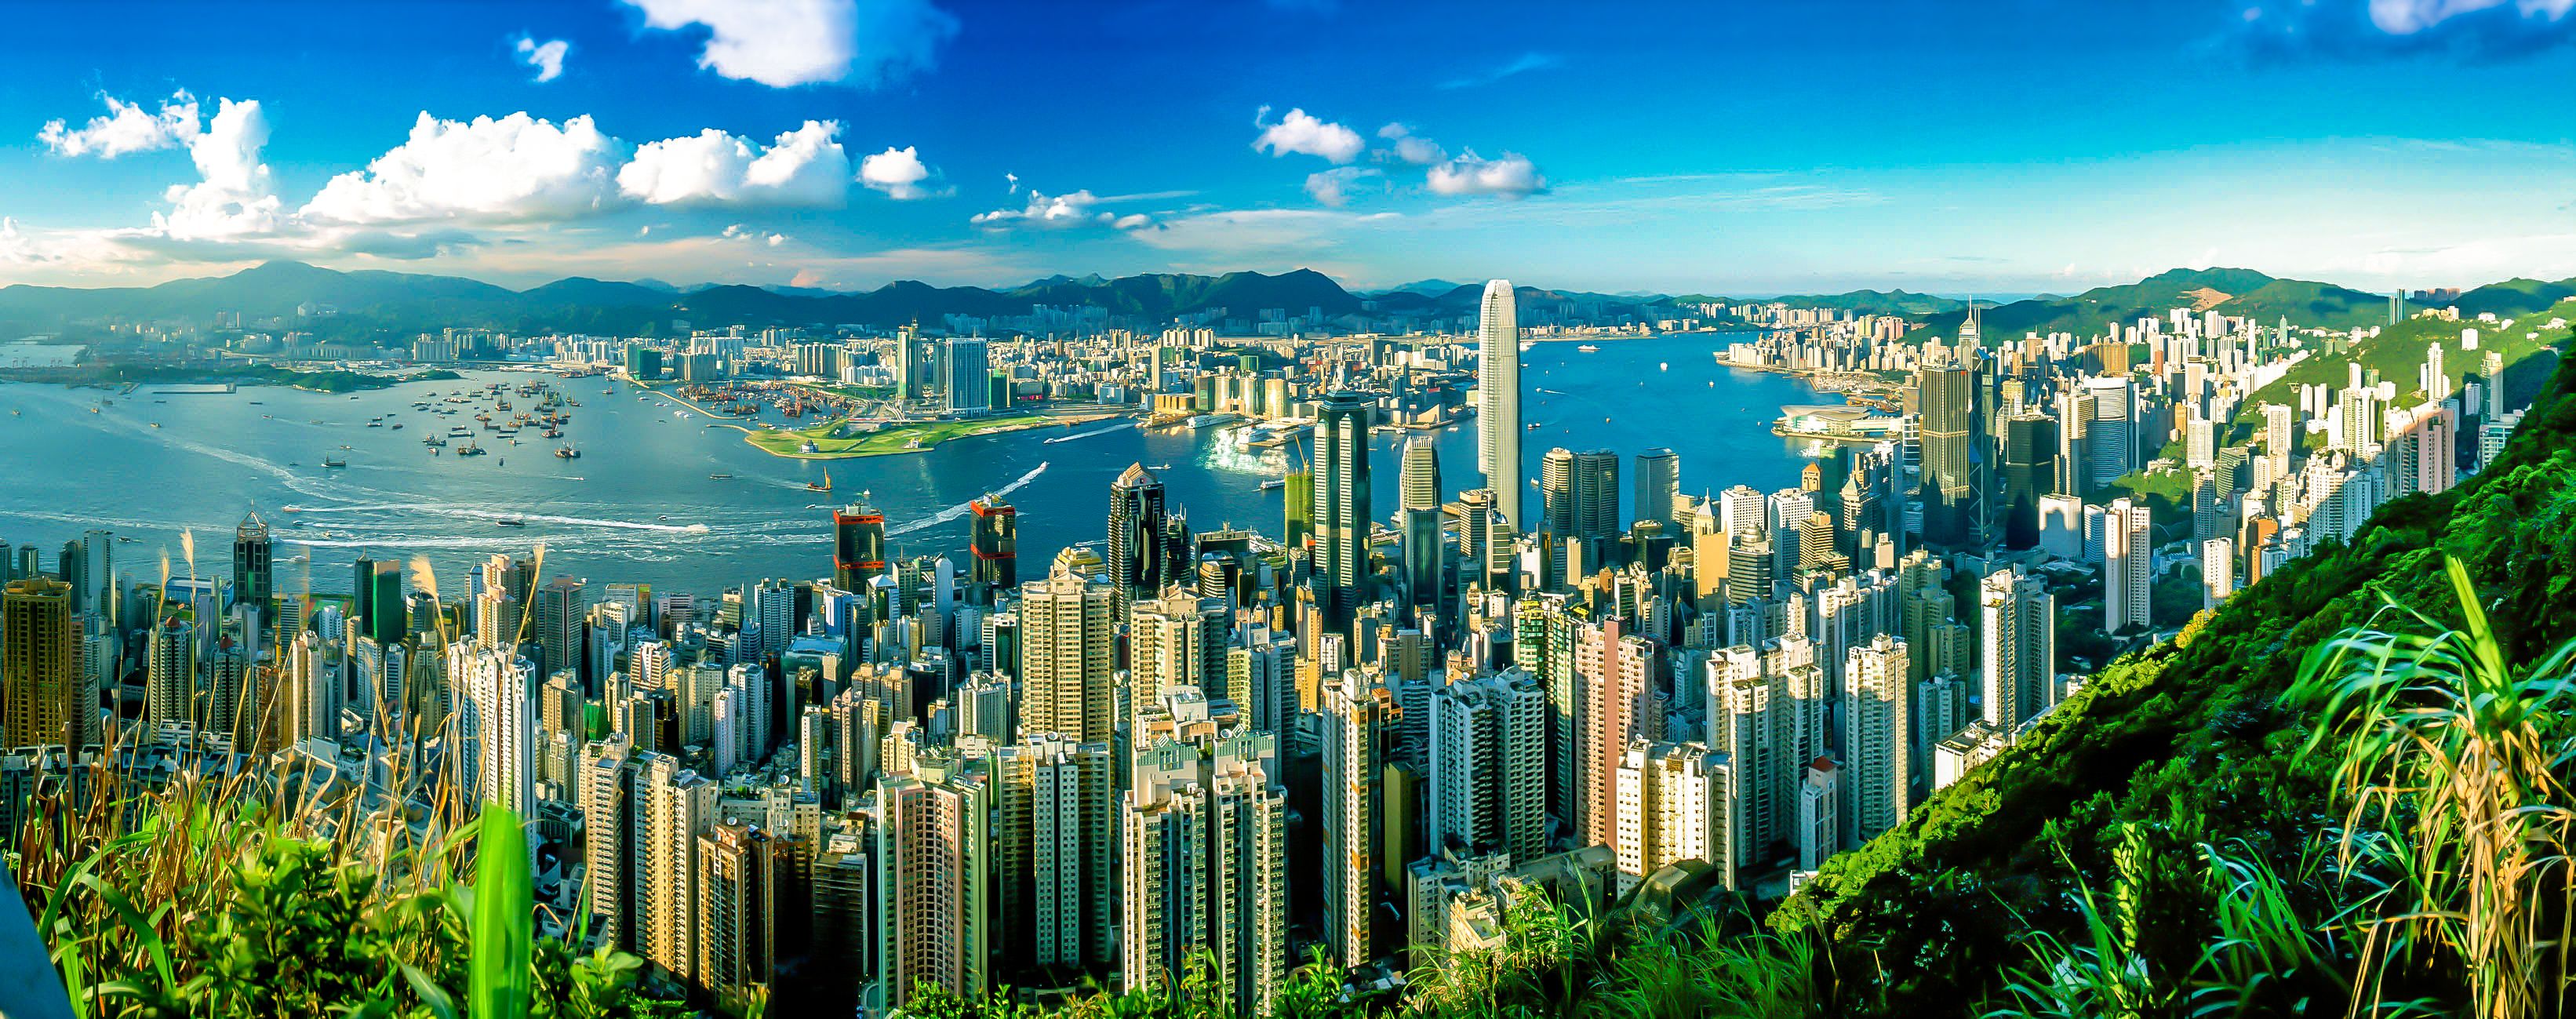 Wallpapers Hong Kong city panorama on the desktop